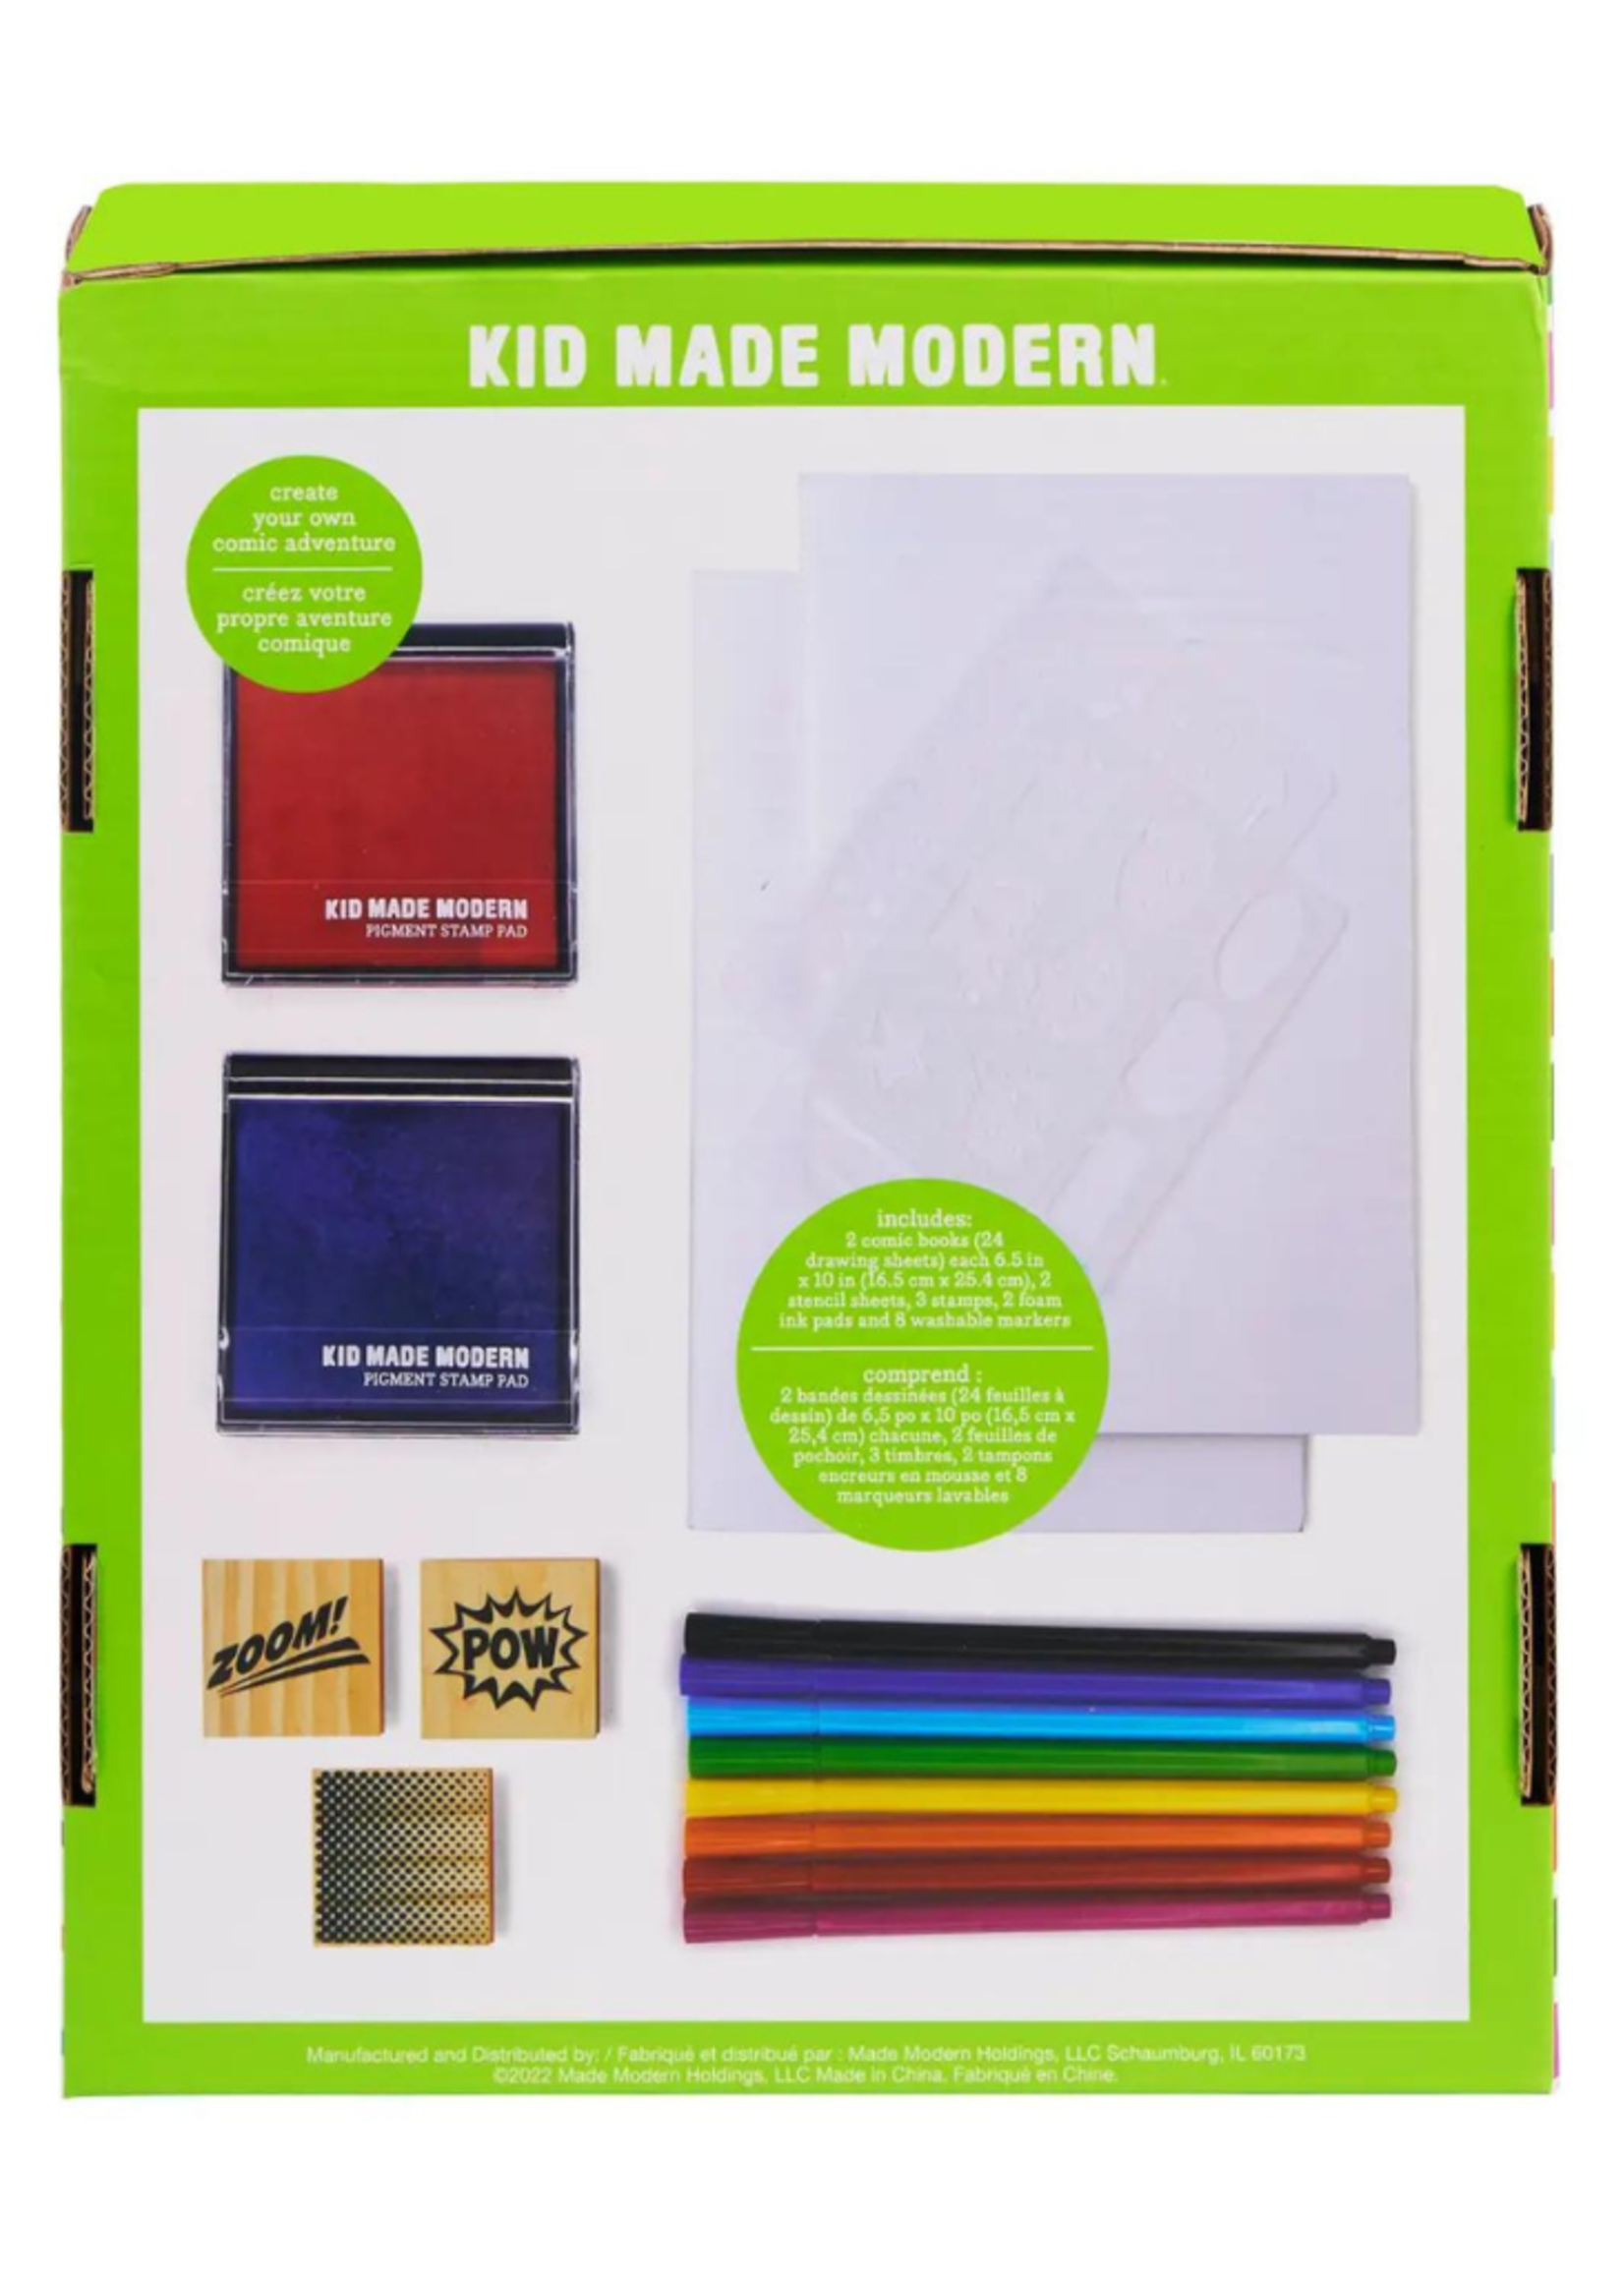 Kid Made Modern Comic Book Kit